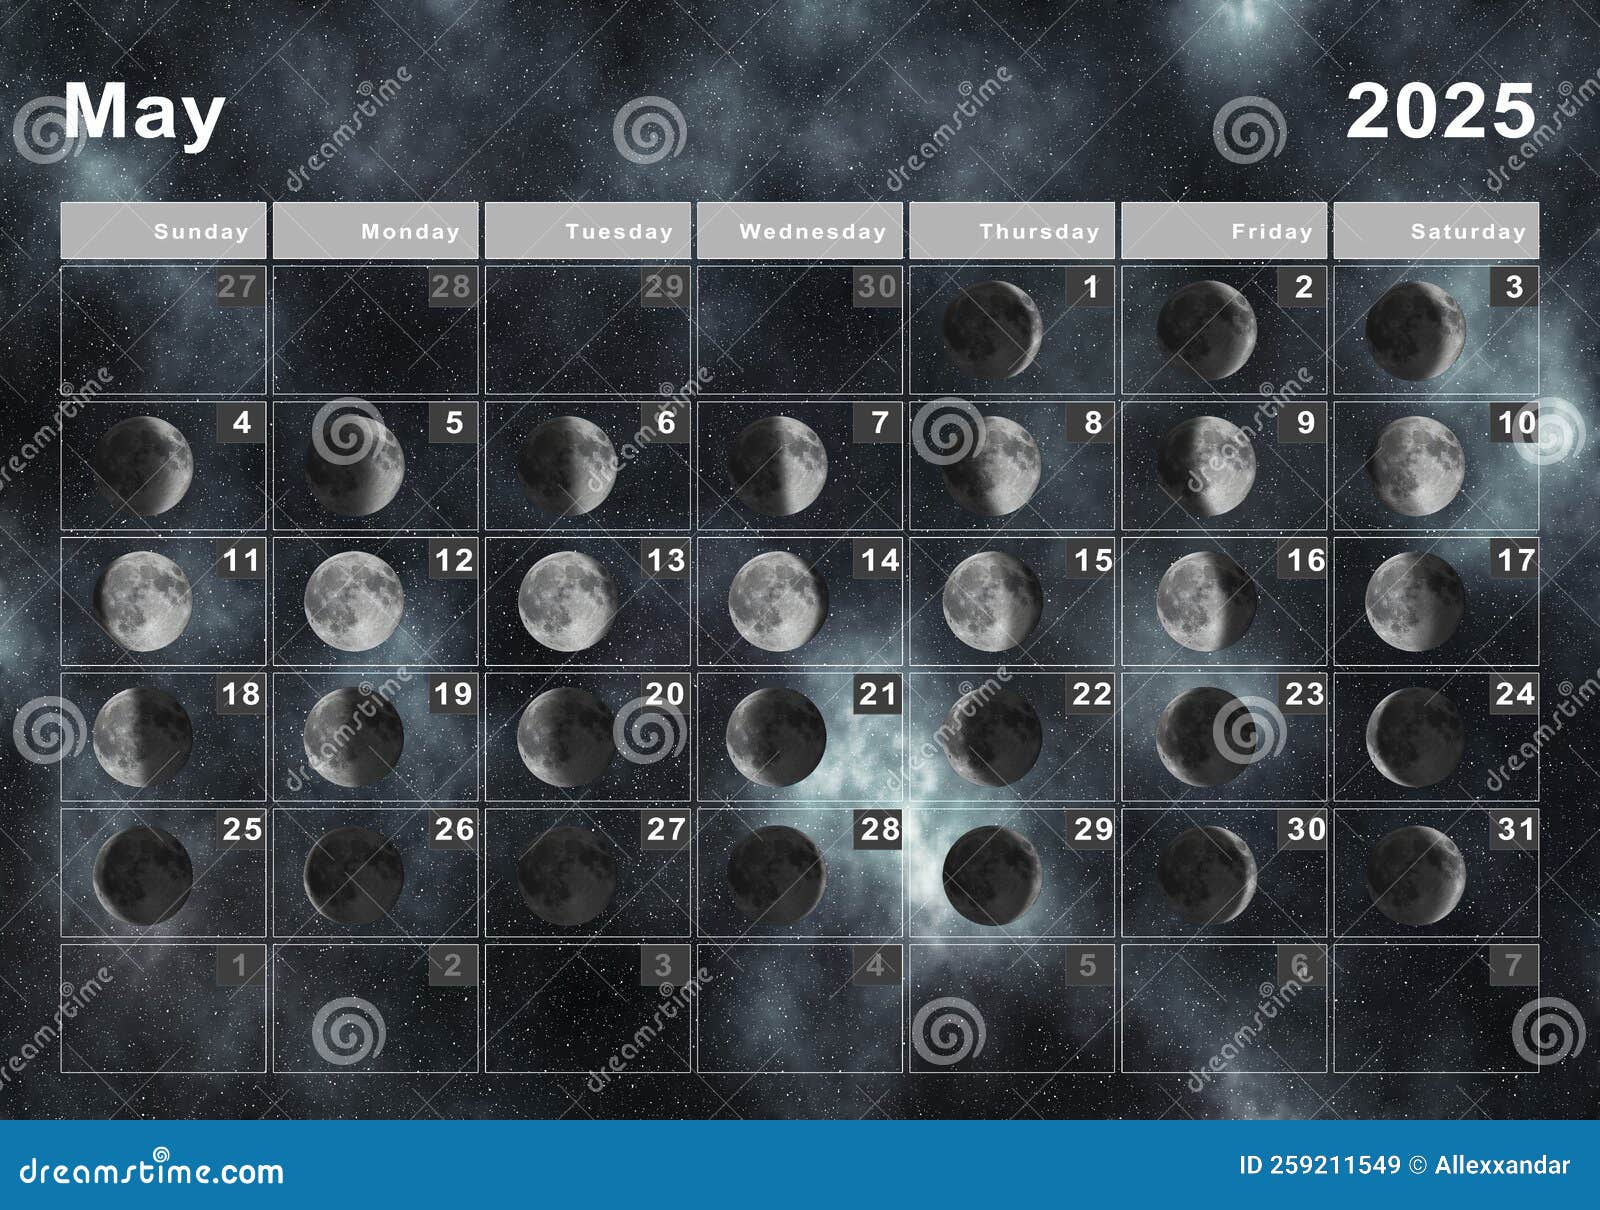 May 2025 Lunar Calendar, Moon Cycles Stock Illustration - Illustration ...